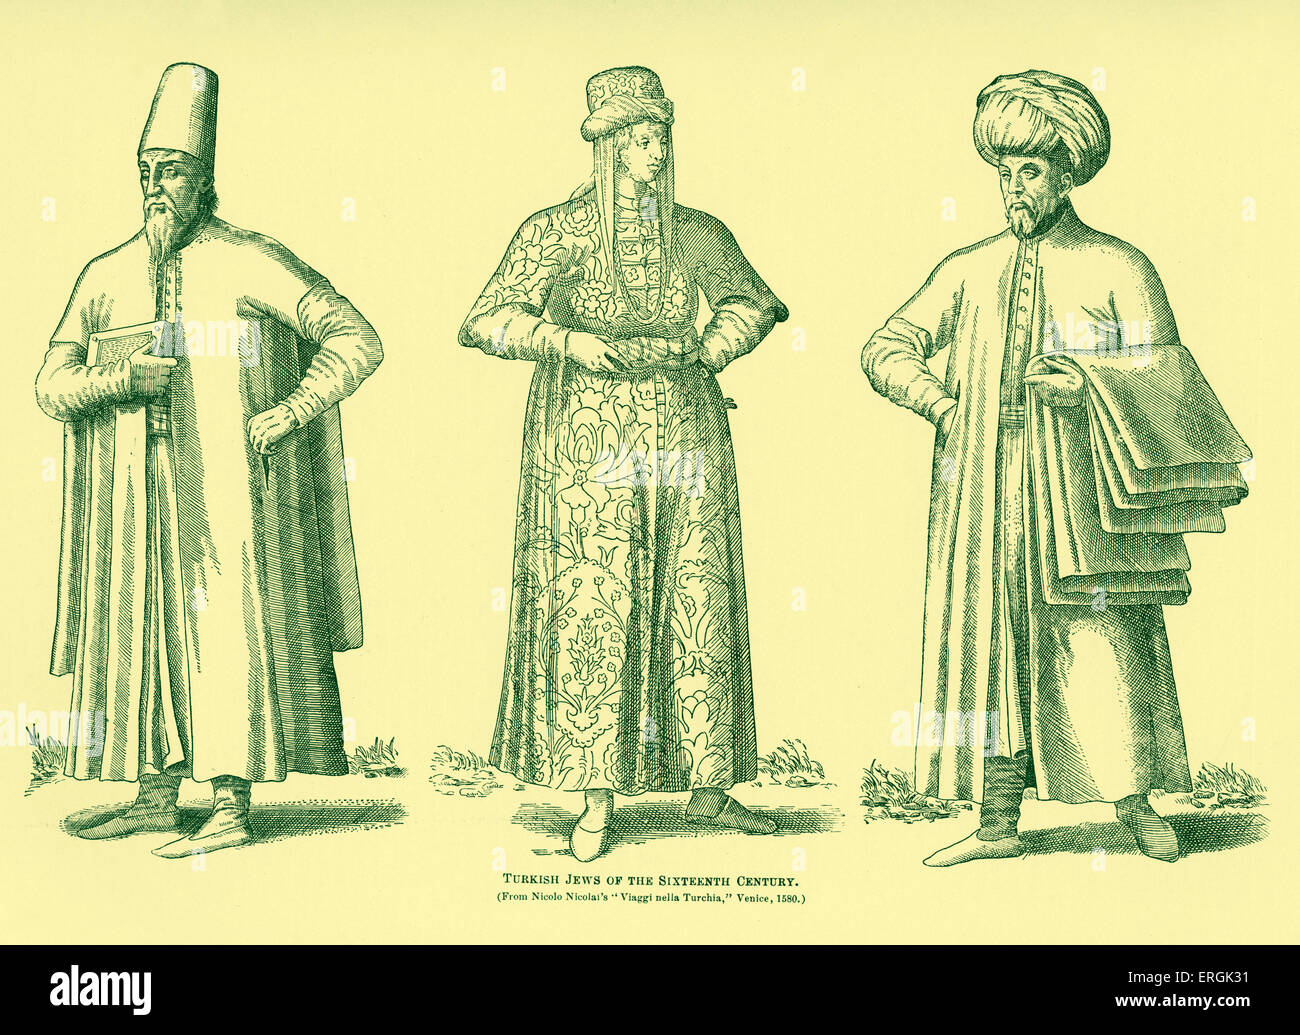 !6th century Turkish Jews. (Source Nicolo Nicolai Viaggi nella Turchia, published Venice 1580) Stock Photo